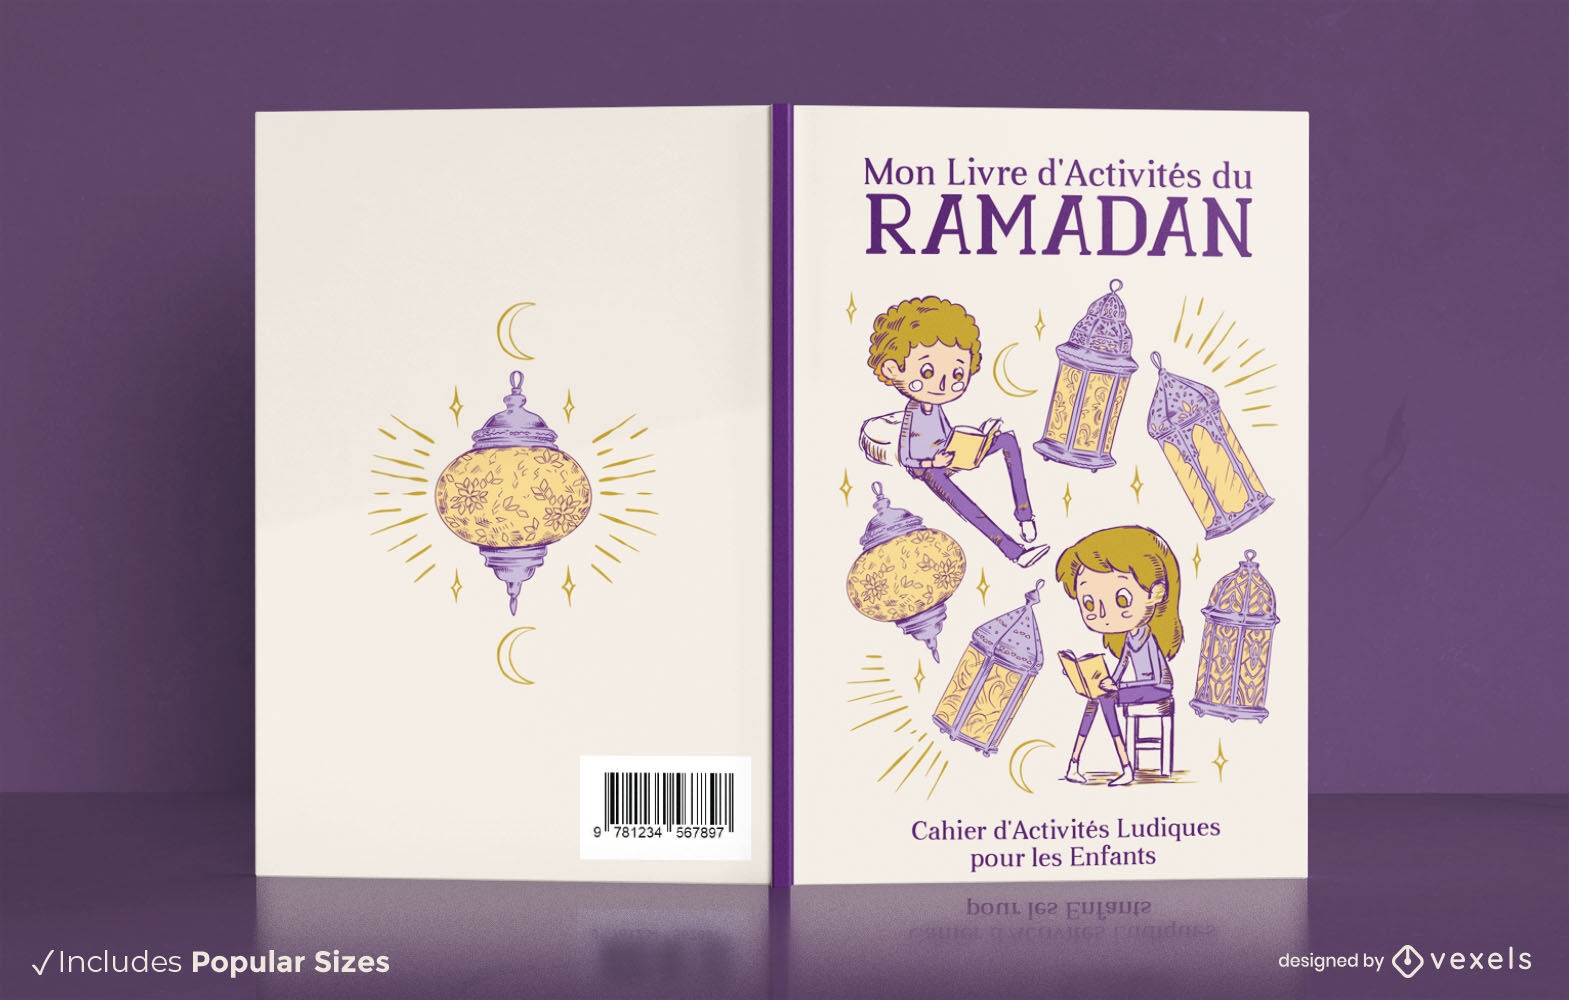 Ramadan children's activity book cover design